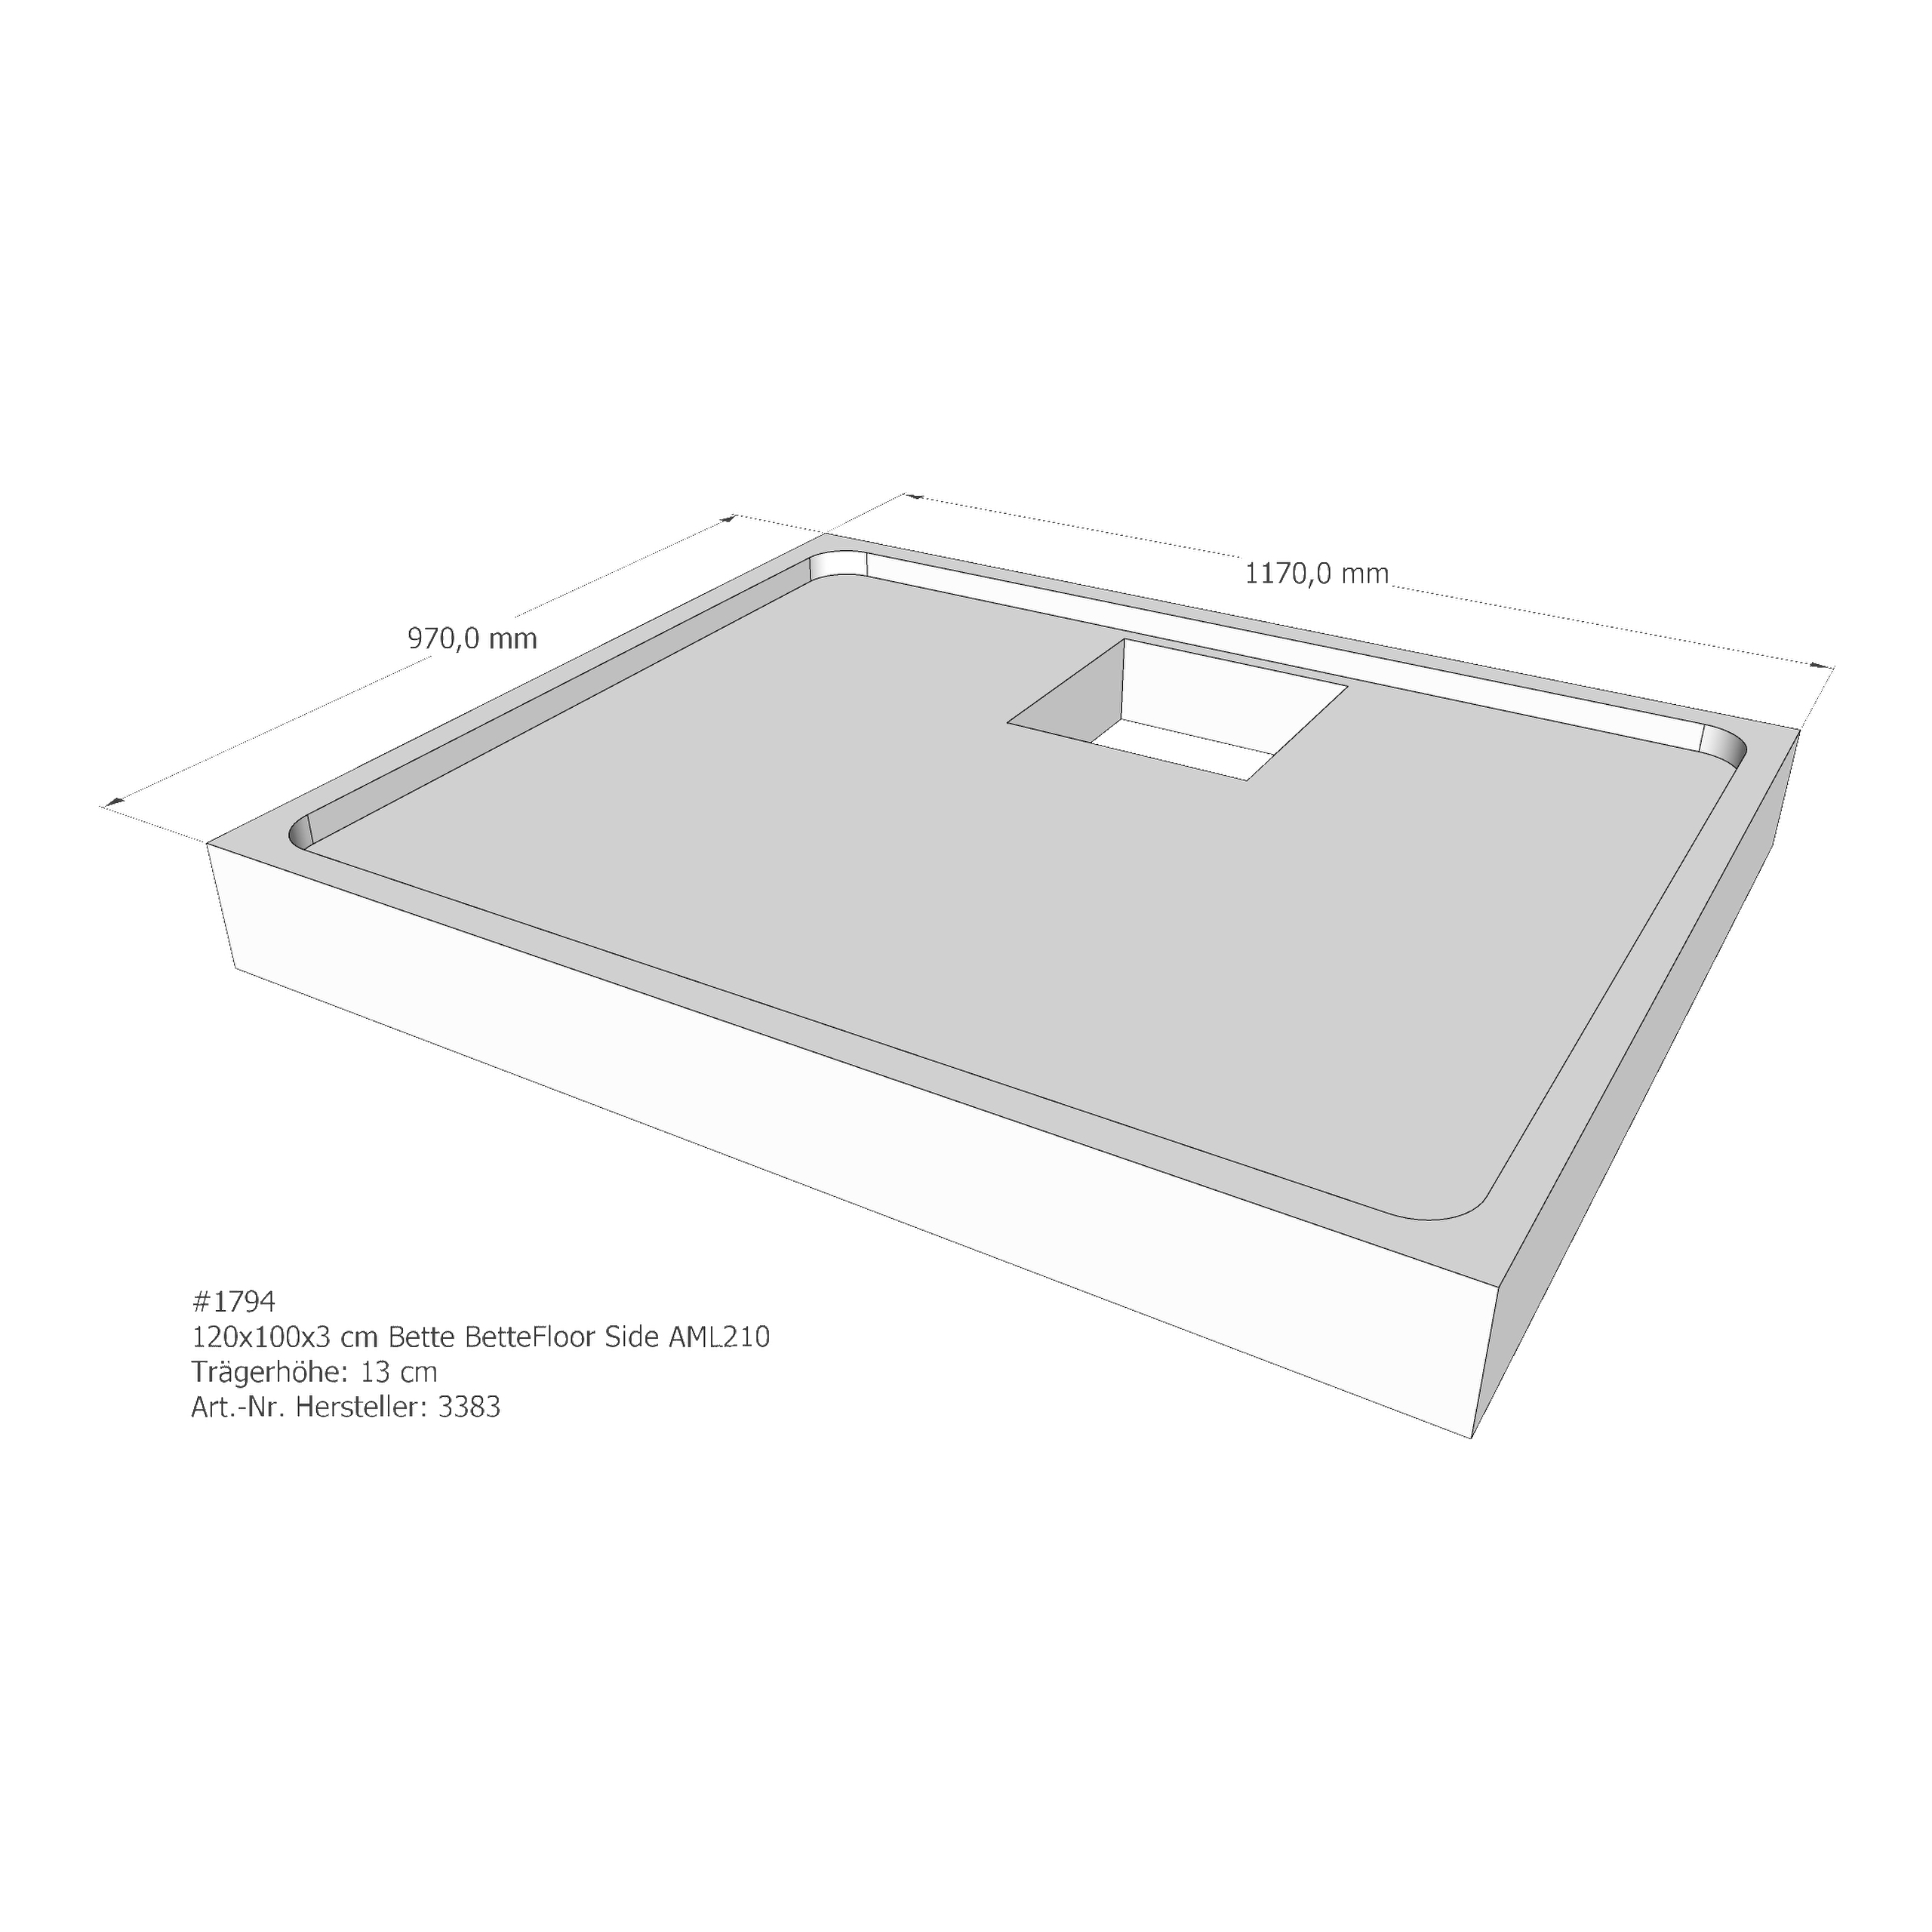 Duschwannenträger für Bette BetteFloor Side 120 × 100 × 3 cm